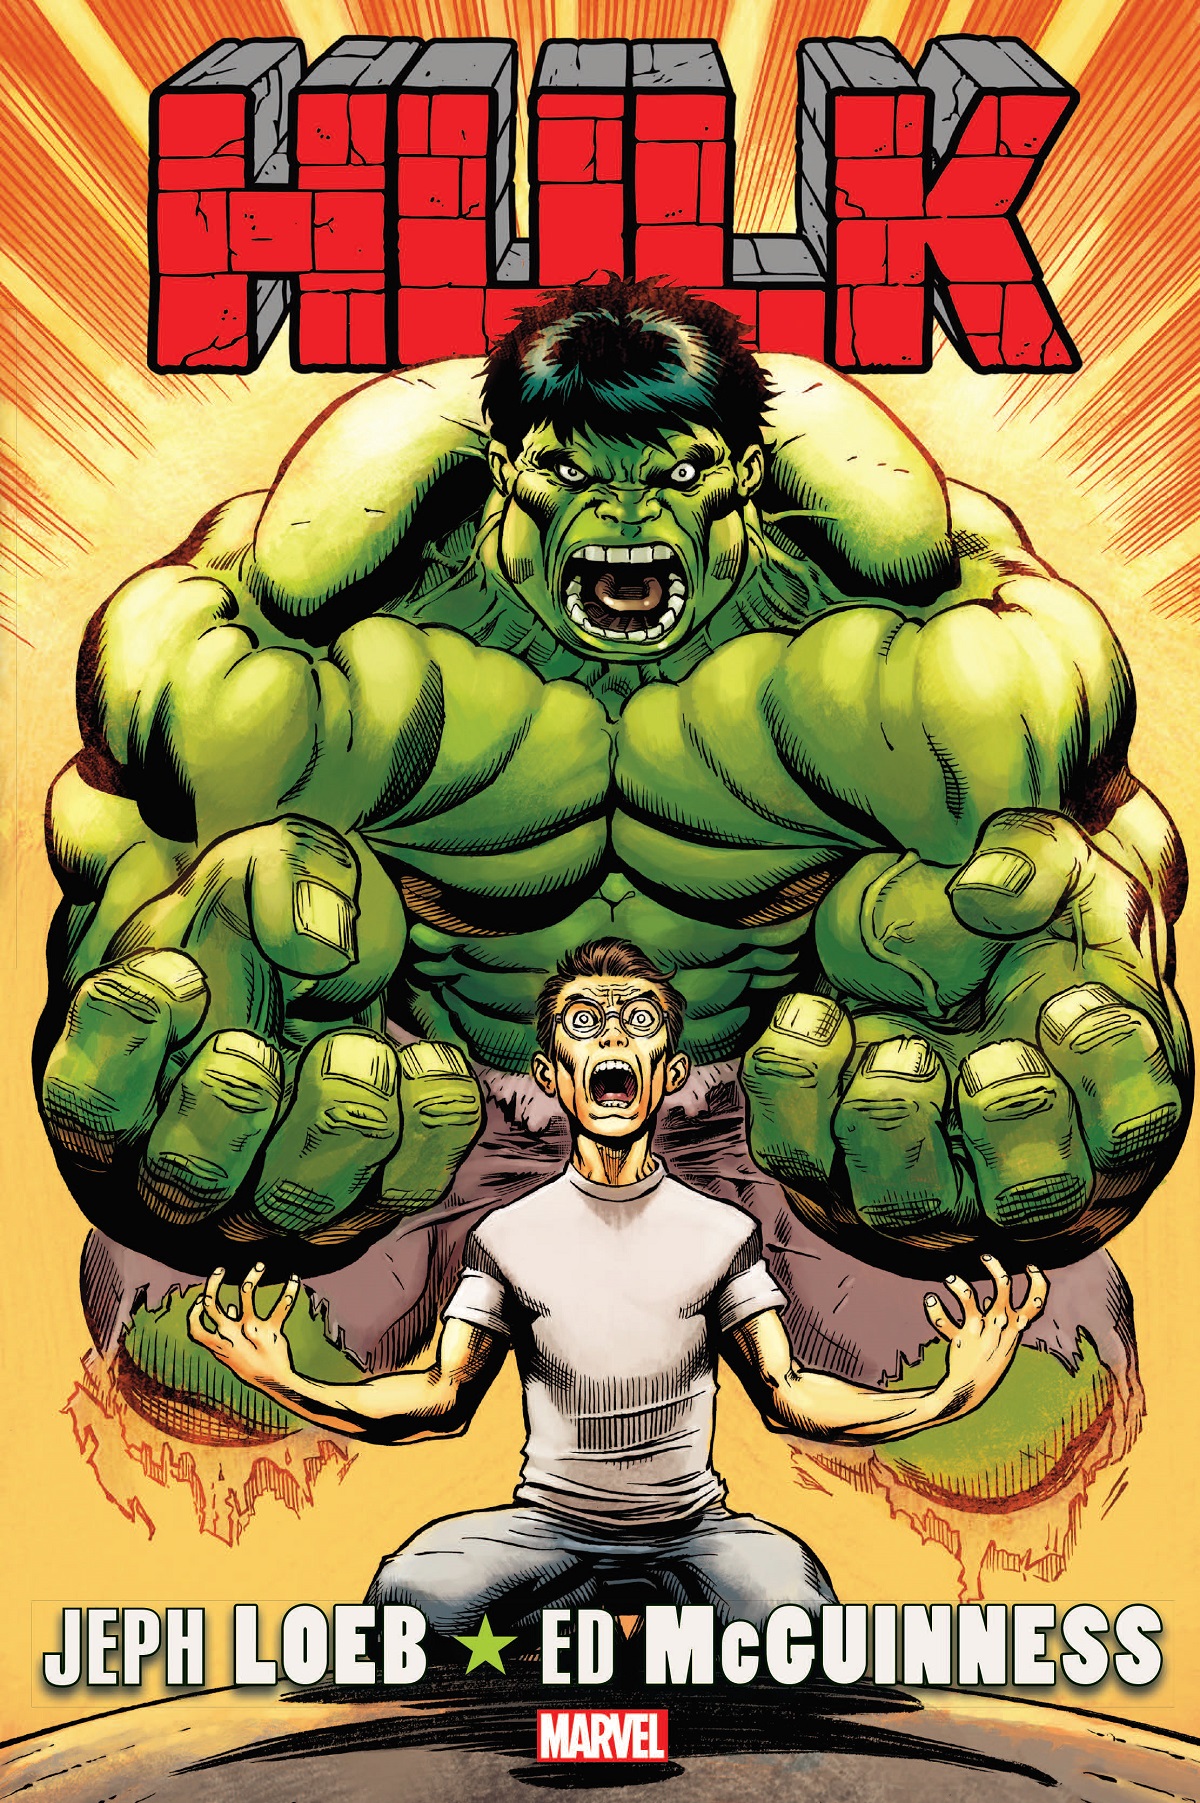 Hulk By Loeb & McGuinness Omnibus  (Hardcover)